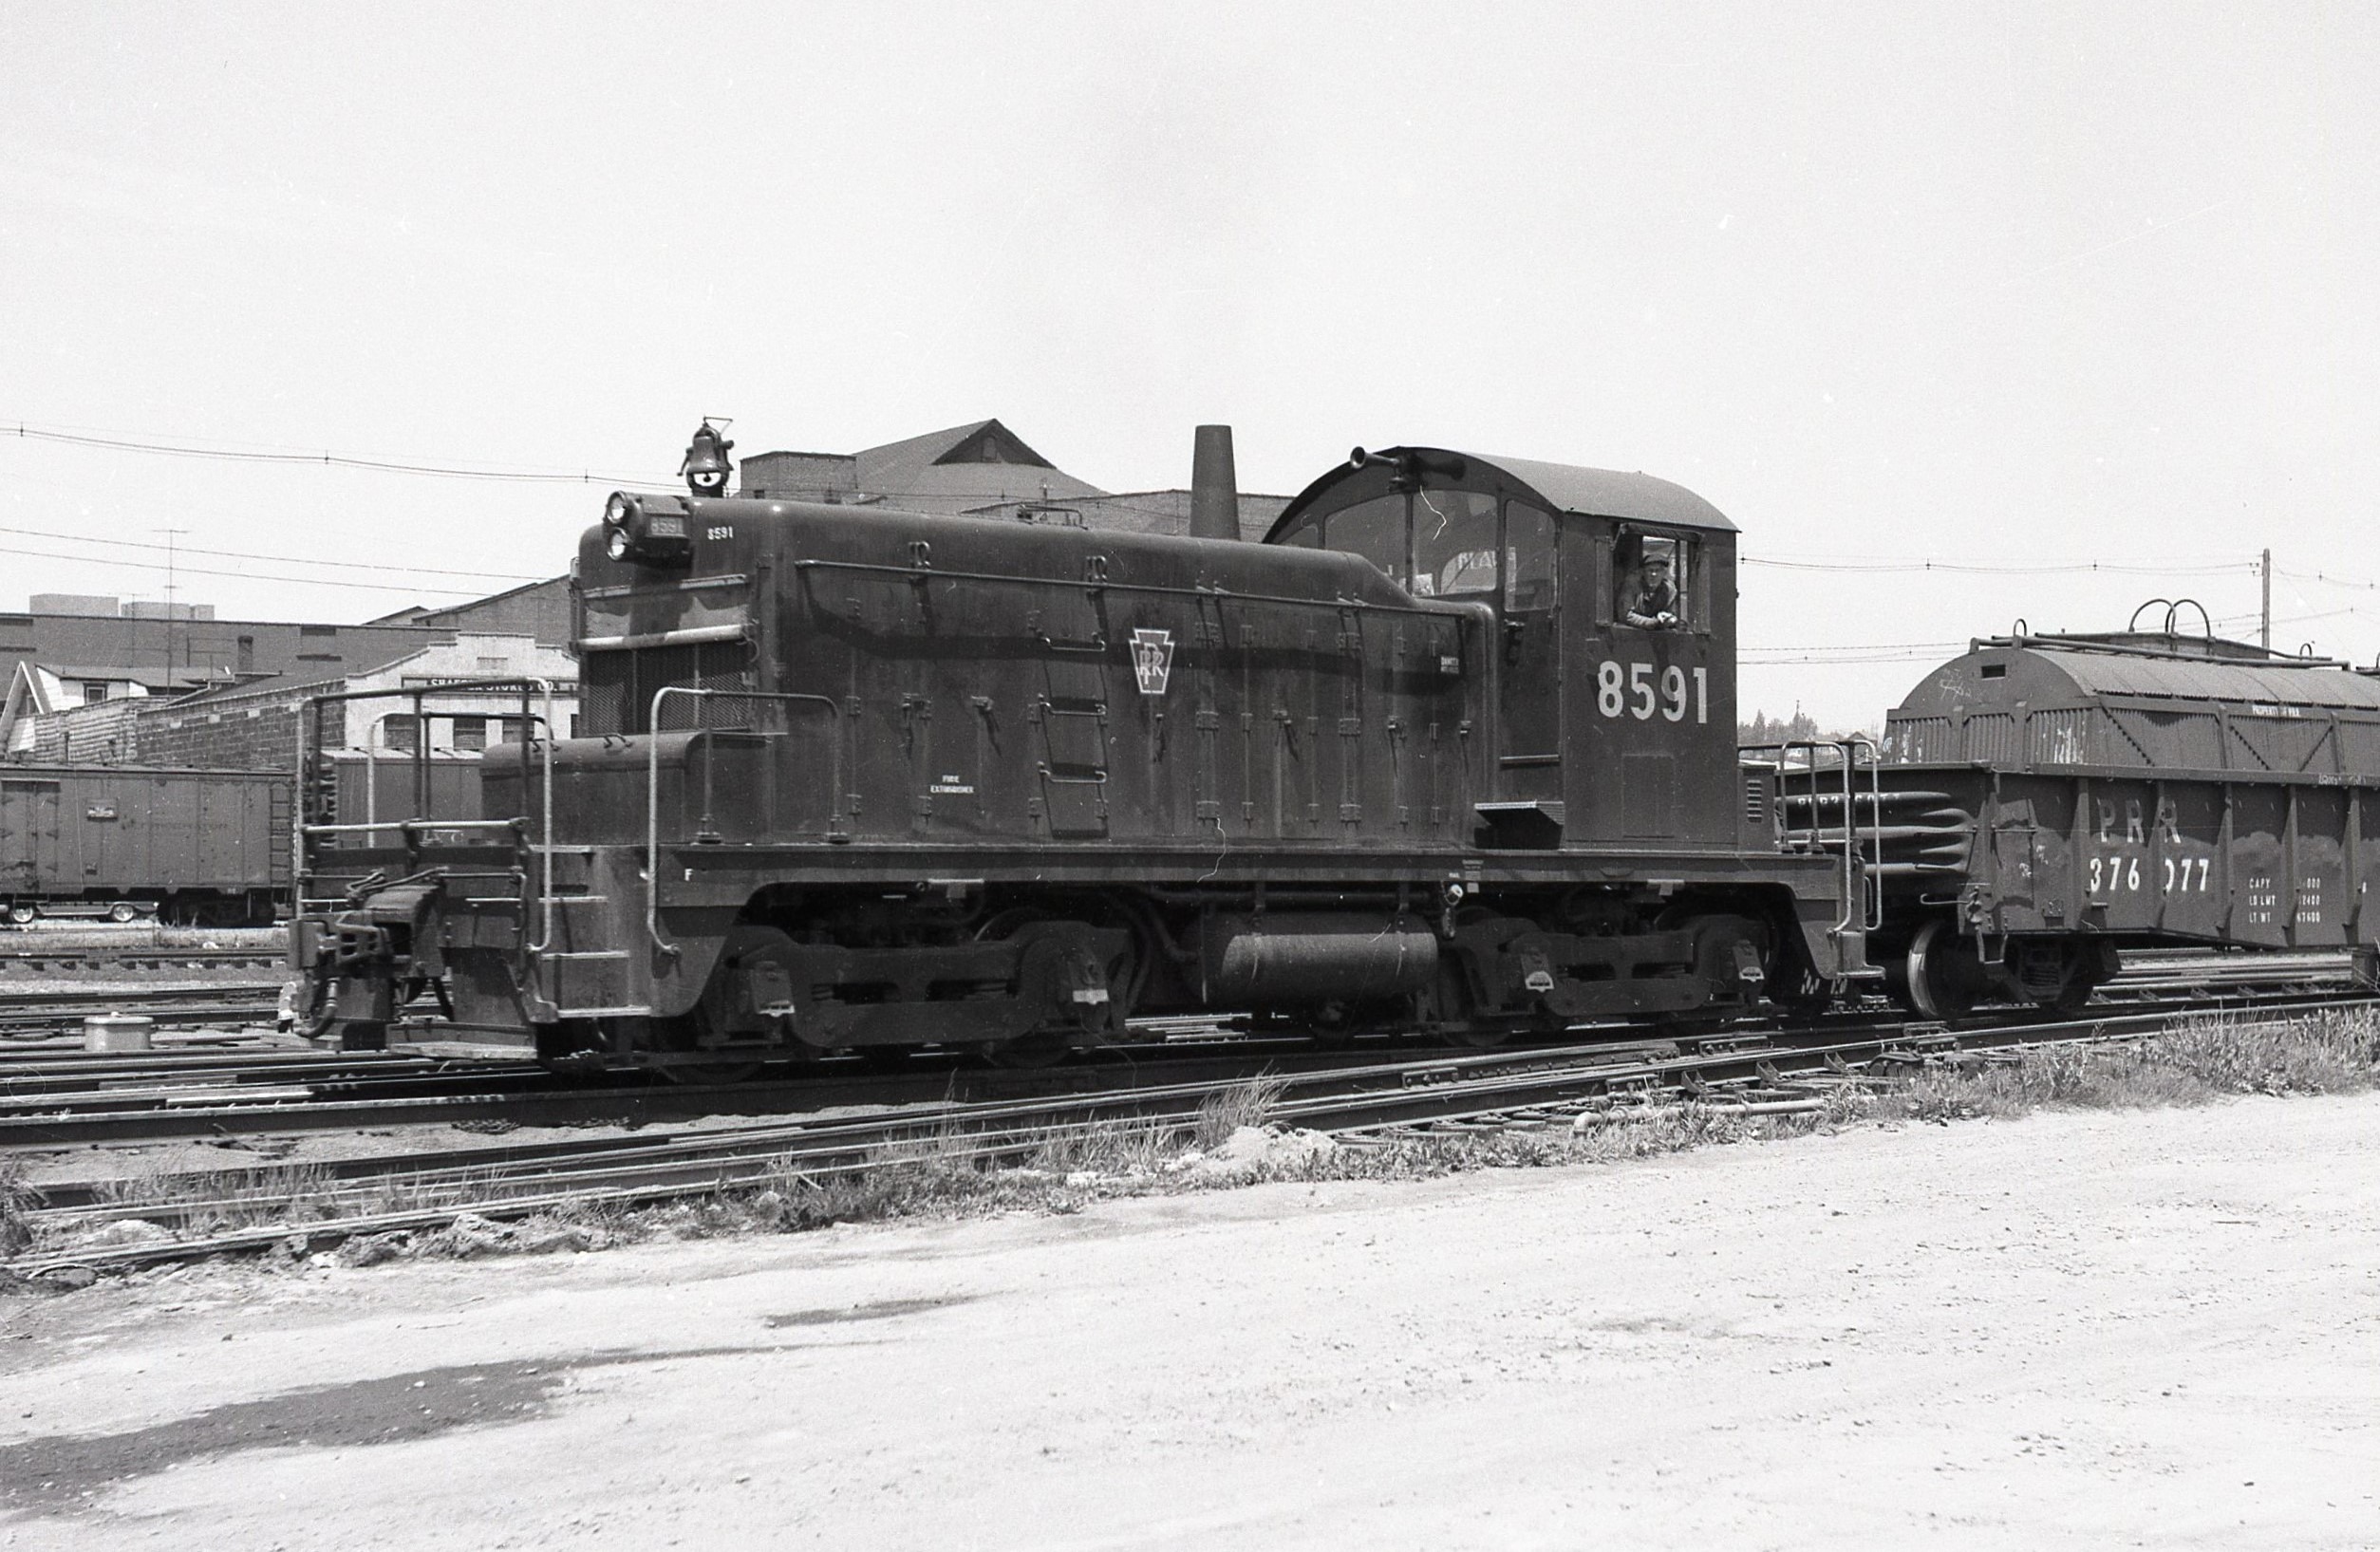 Pennsylvania Railroad | Altoona, Pa. | EMD SW1 8591 | 1966 | Elmer Kremkow photo